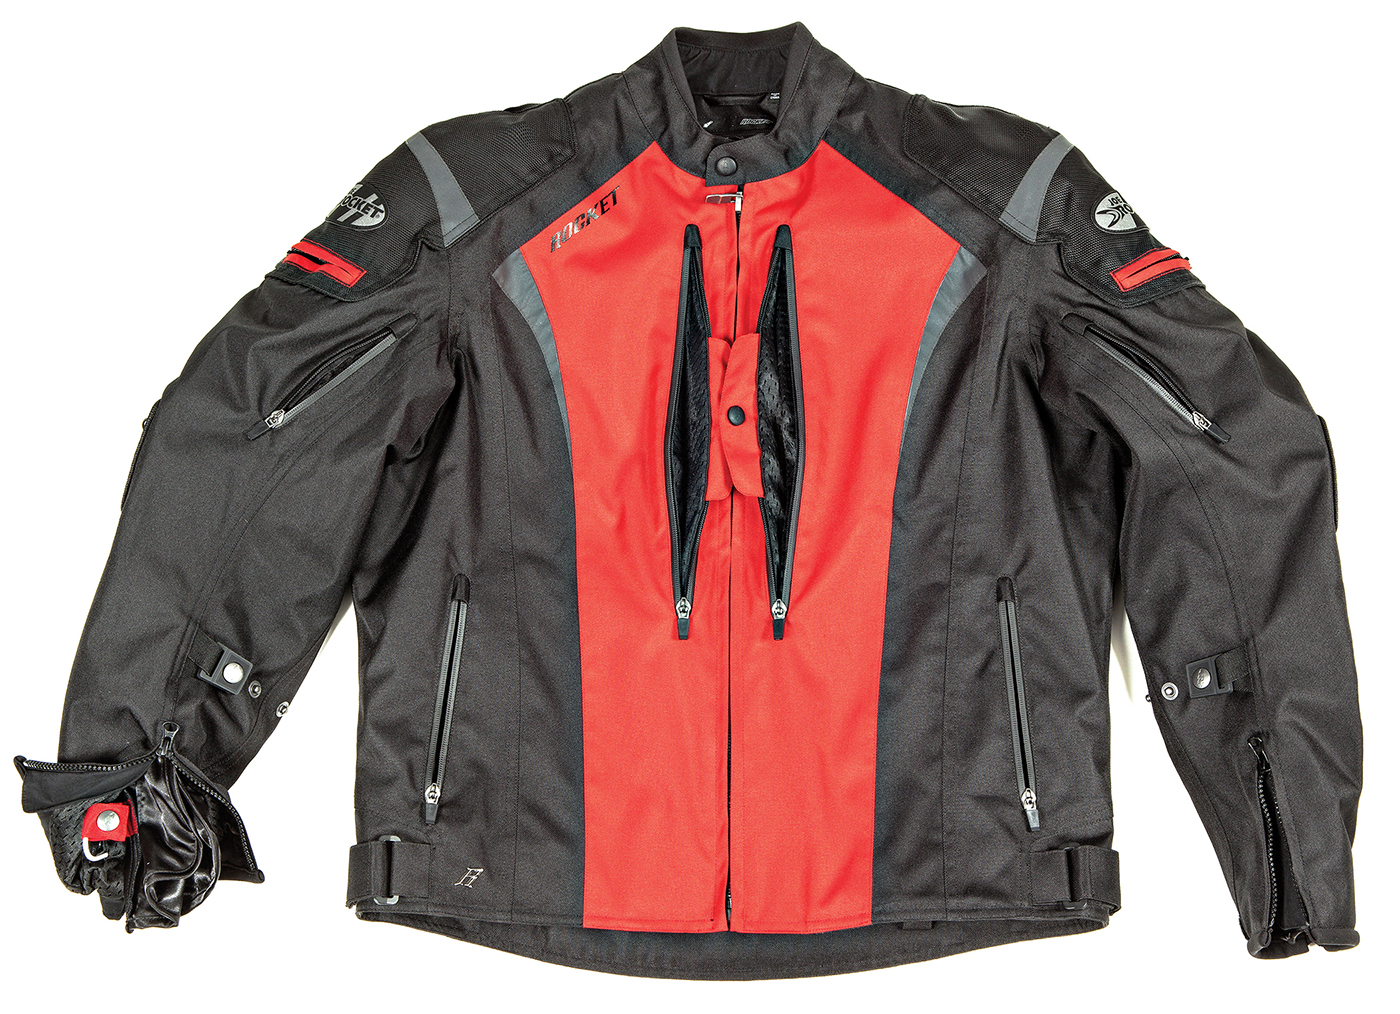 Joe Rocket Atomic 5.0 Men's Black Textile Jacket with CE Armor X-Large - image 5 of 7